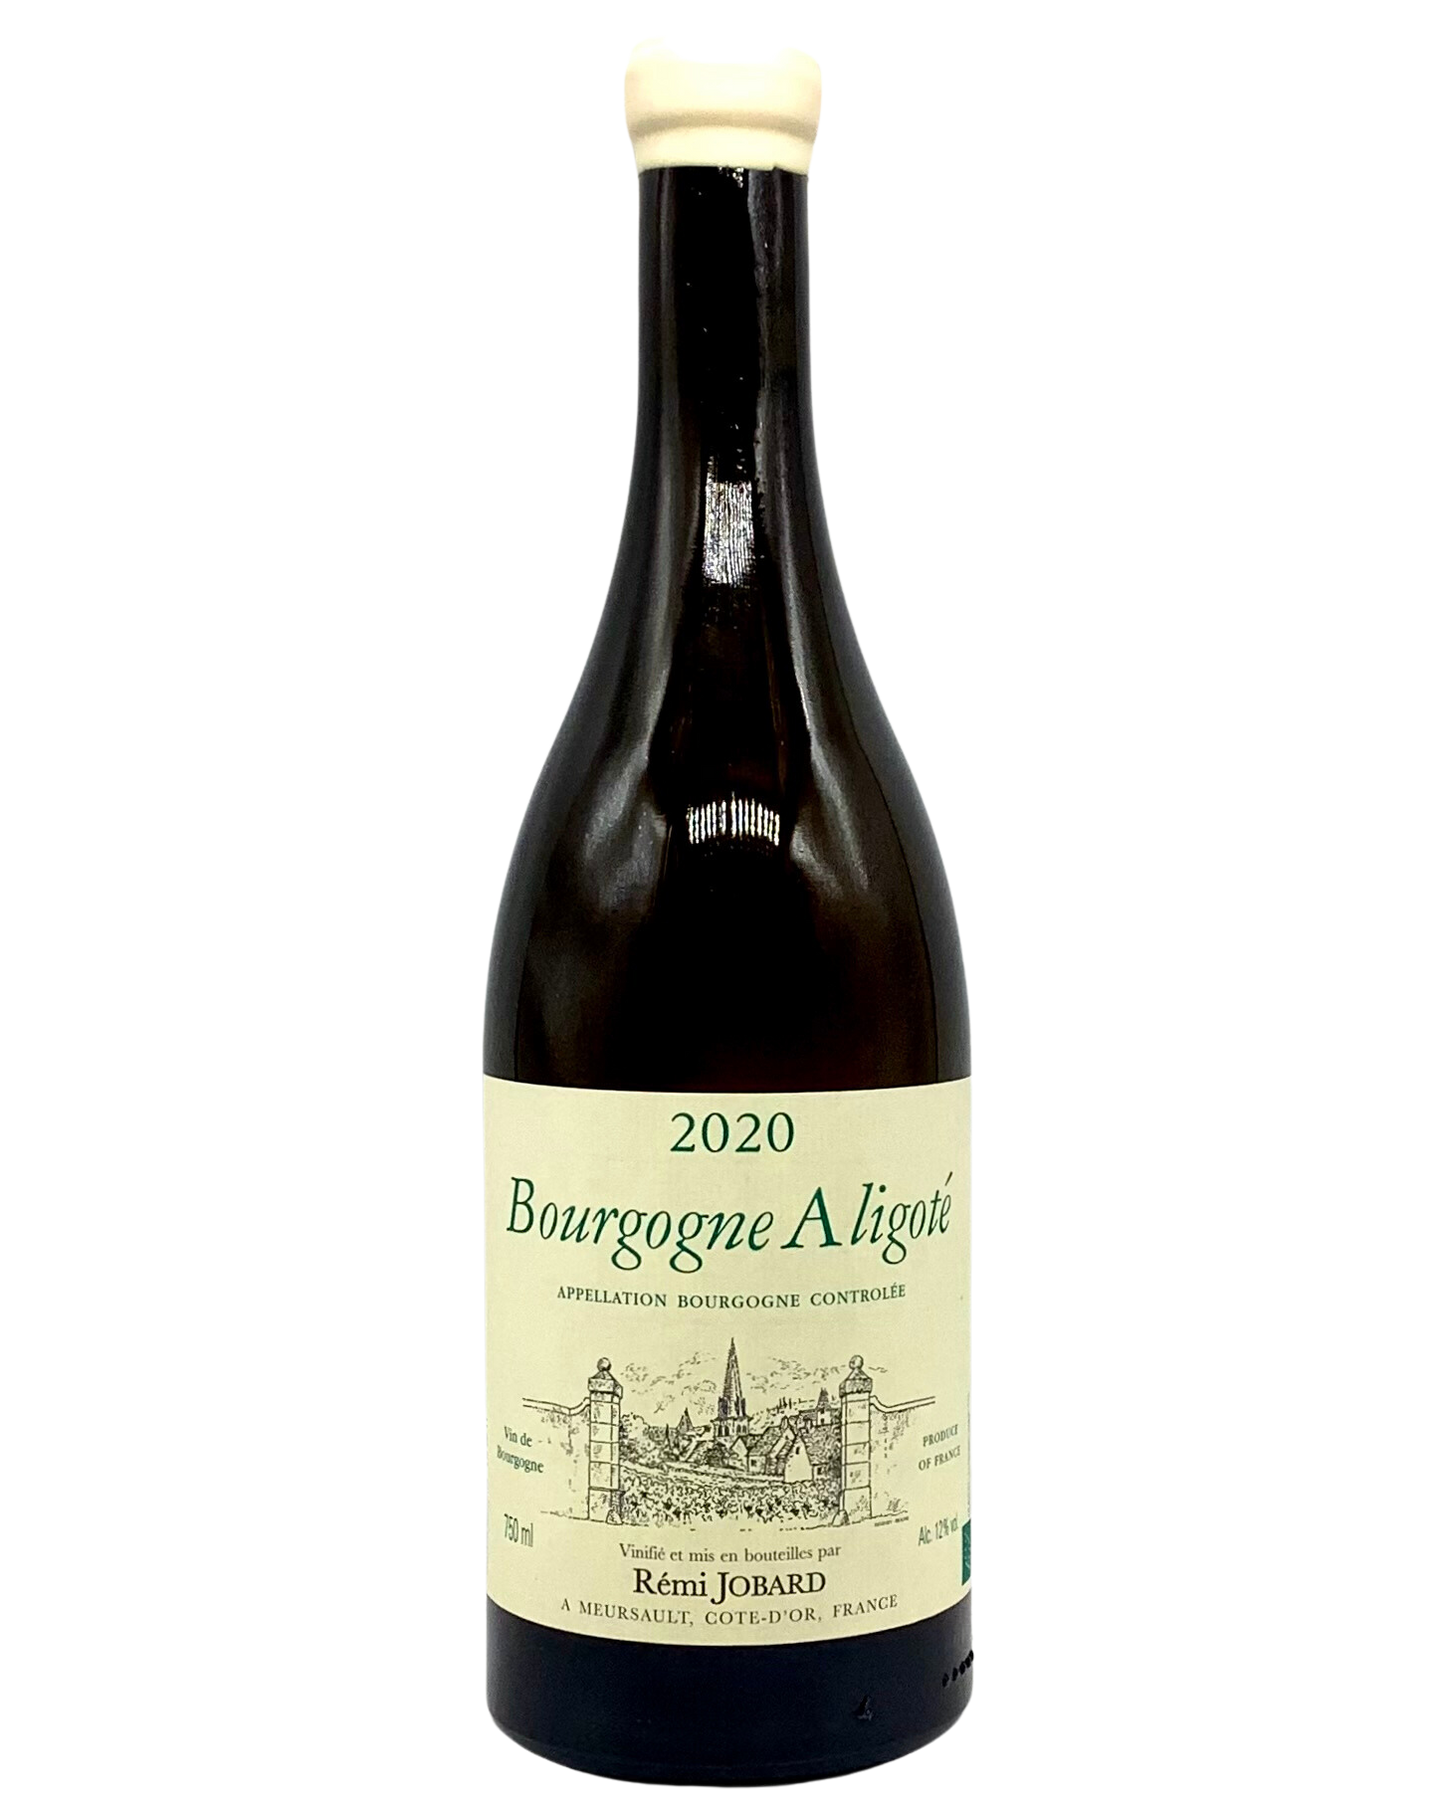 Rémi Jobard, Bourgogne Aligoté, Burgundy, France 2020 organic